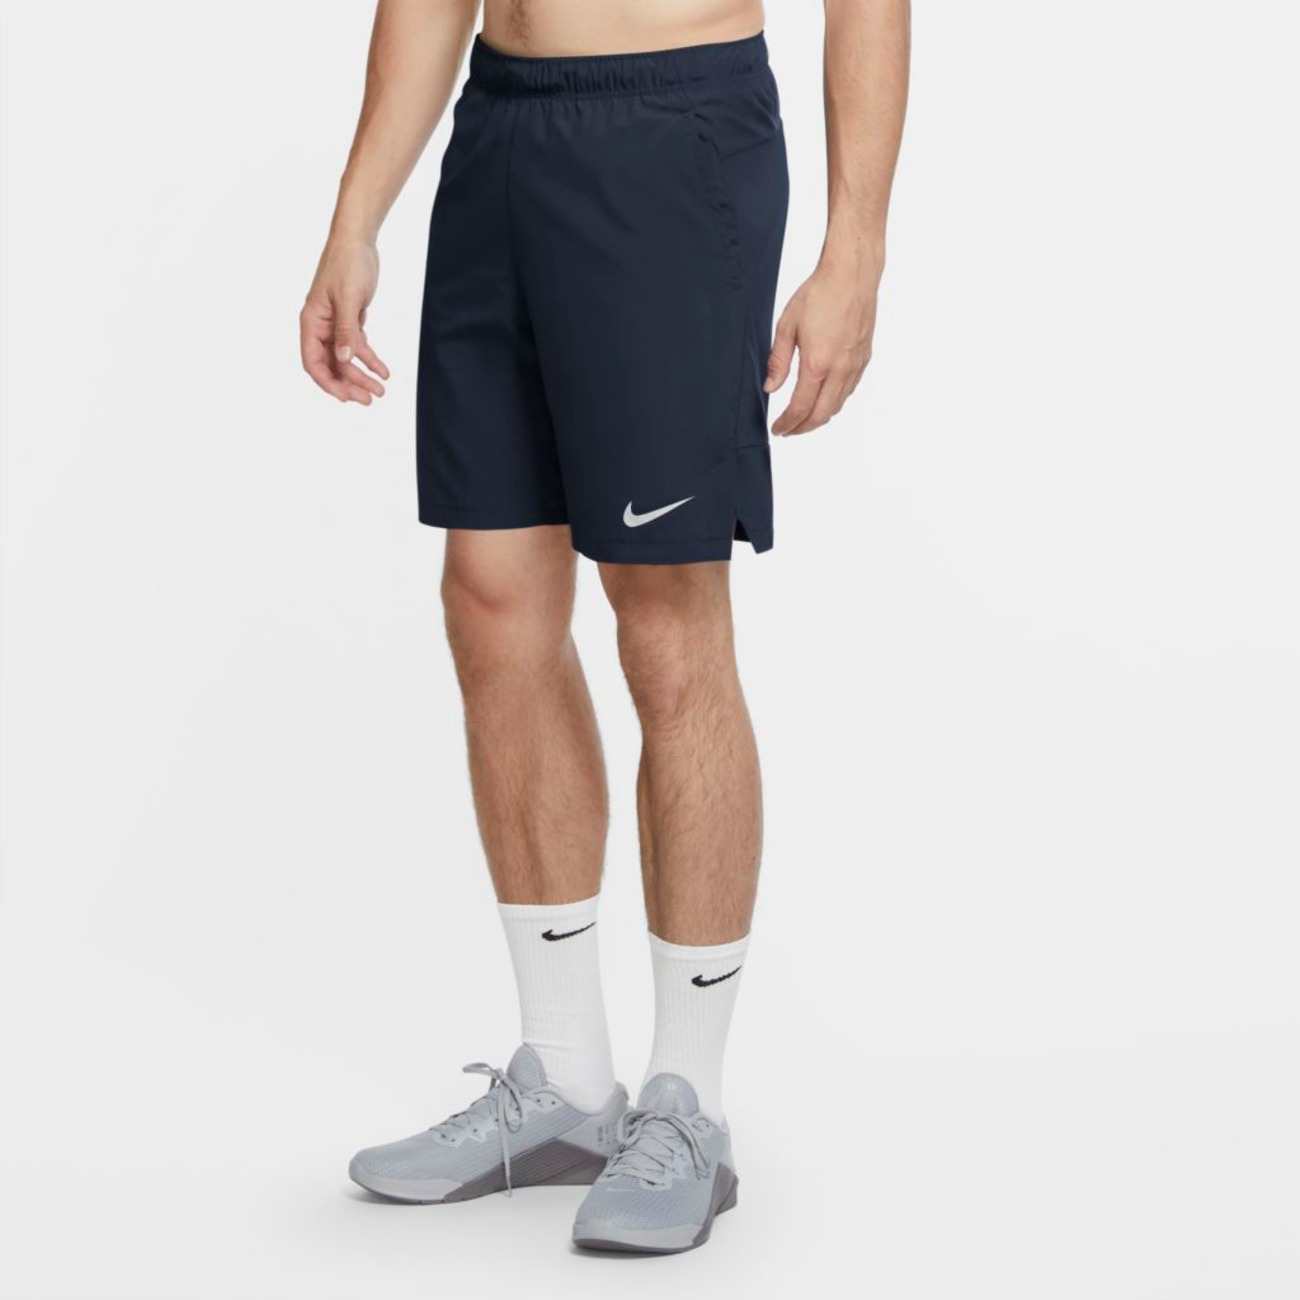 Shorts Nike Flex Masculino - Foto 5